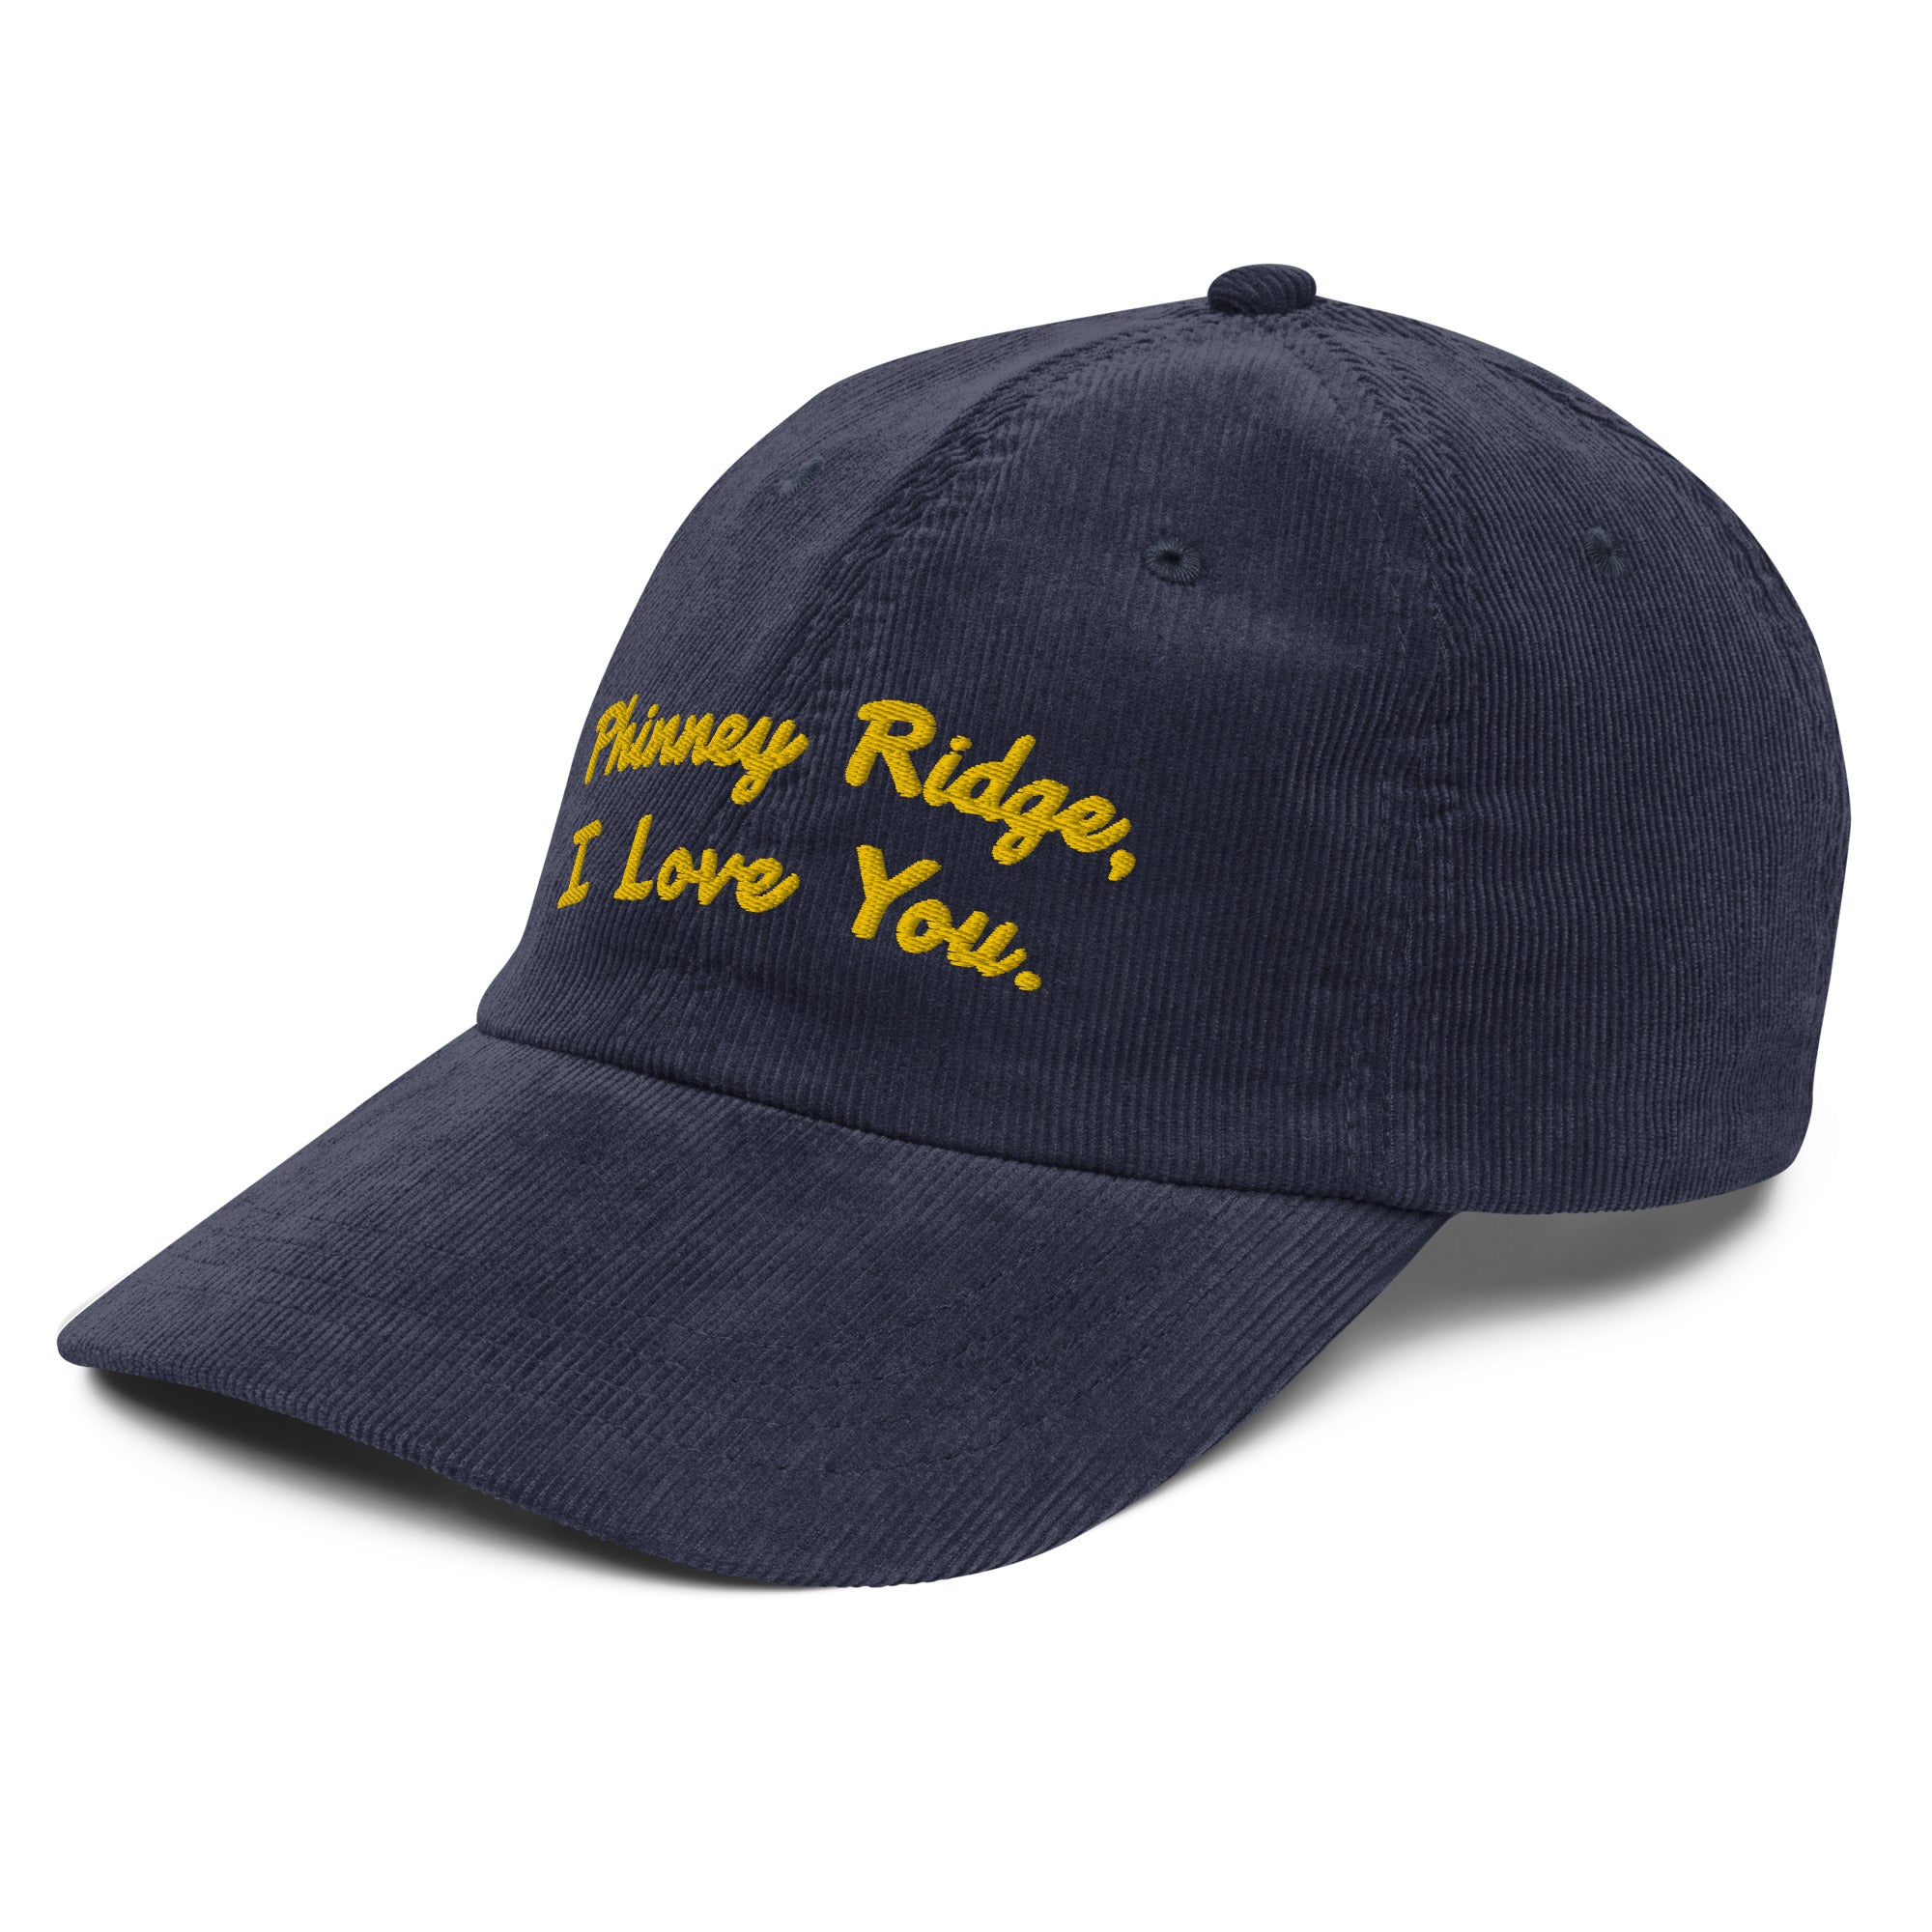 I Love You Corduroy Hat - Phinney Ridge | Seattle, WA